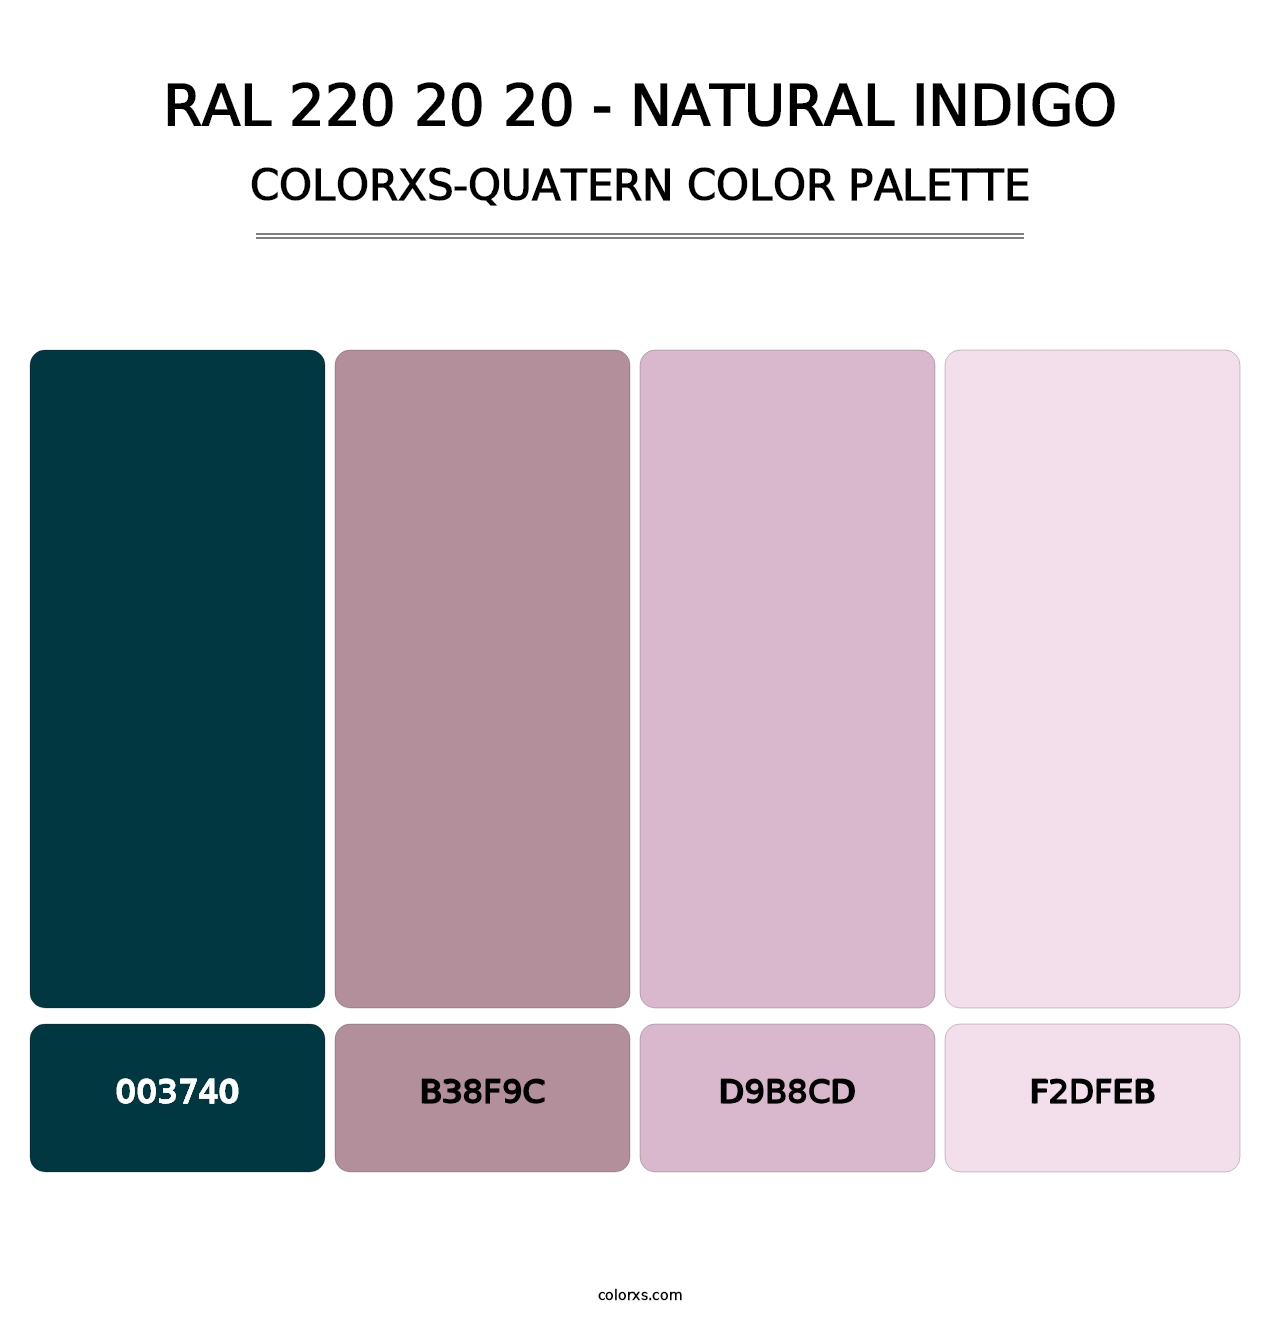 RAL 220 20 20 - Natural Indigo - Colorxs Quatern Palette